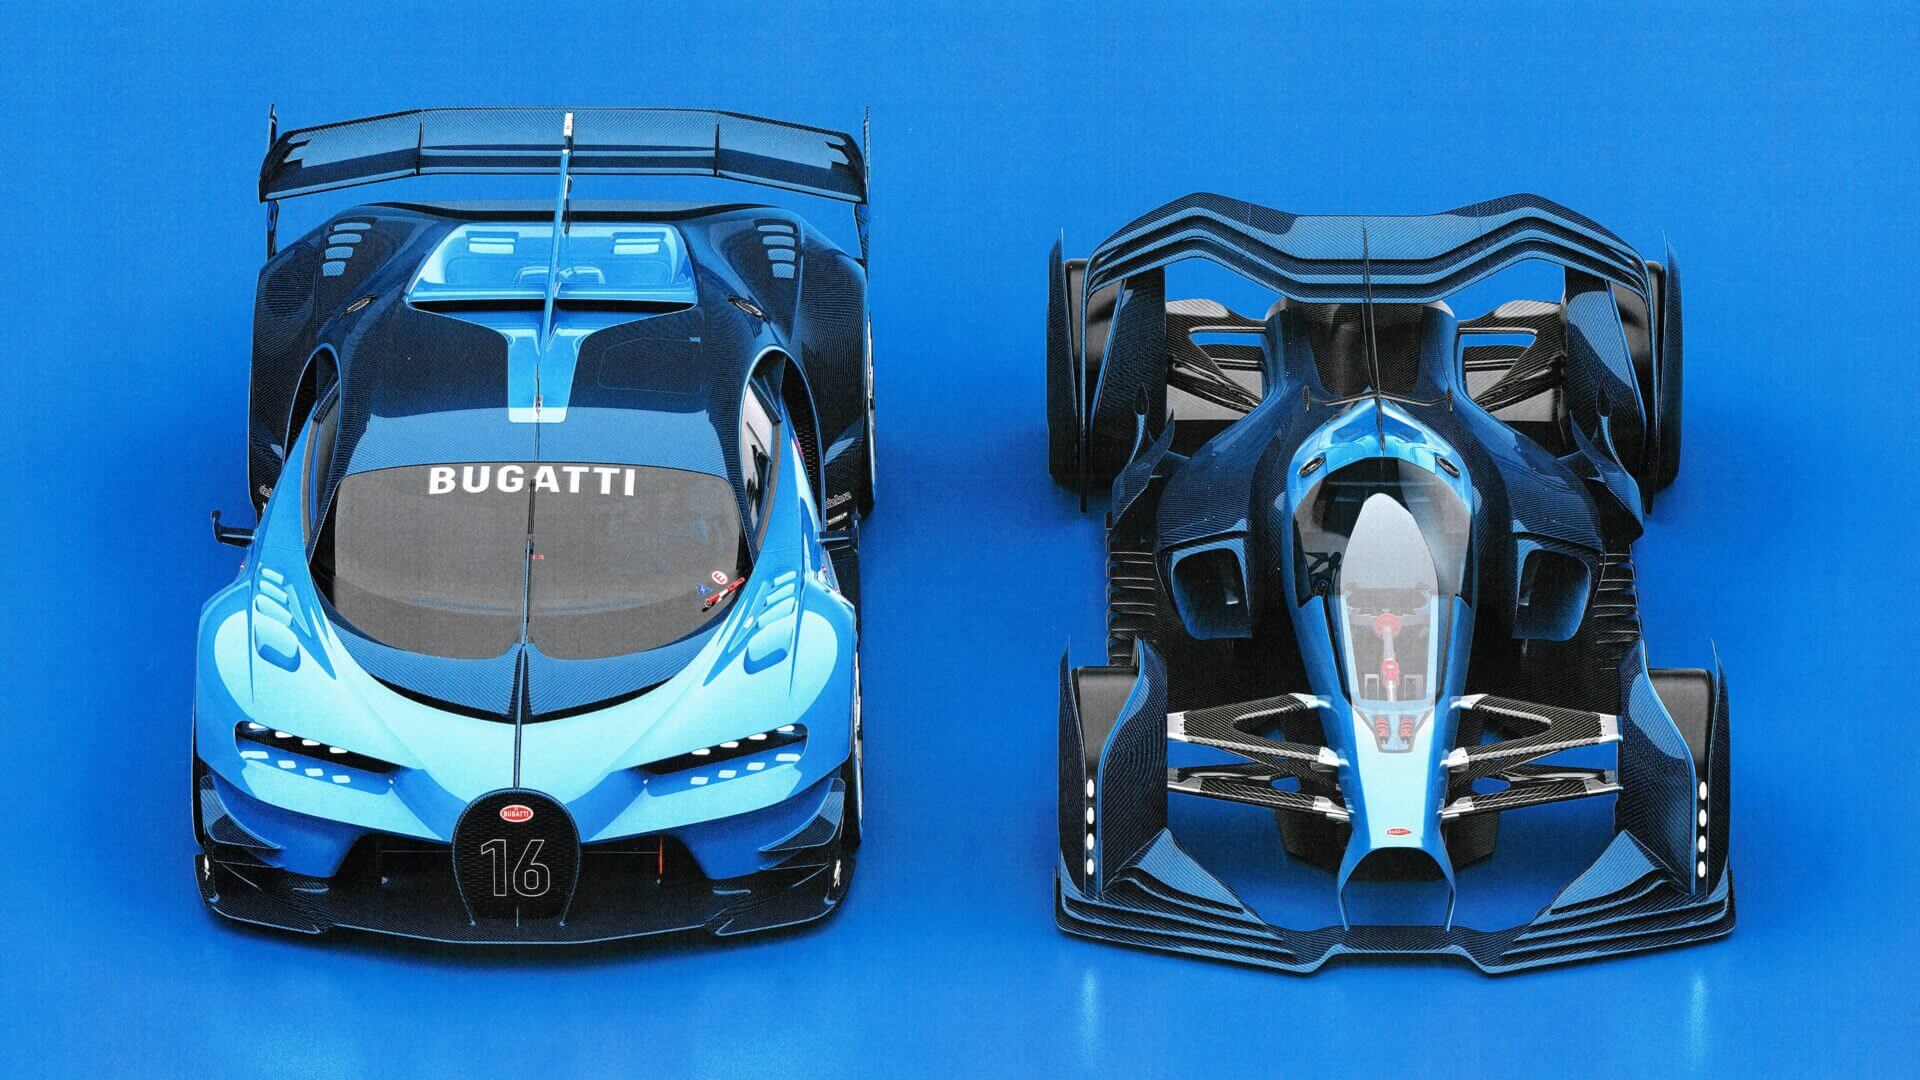 Bugatti Designer Reveals a Shelved Second Vision GT Concept